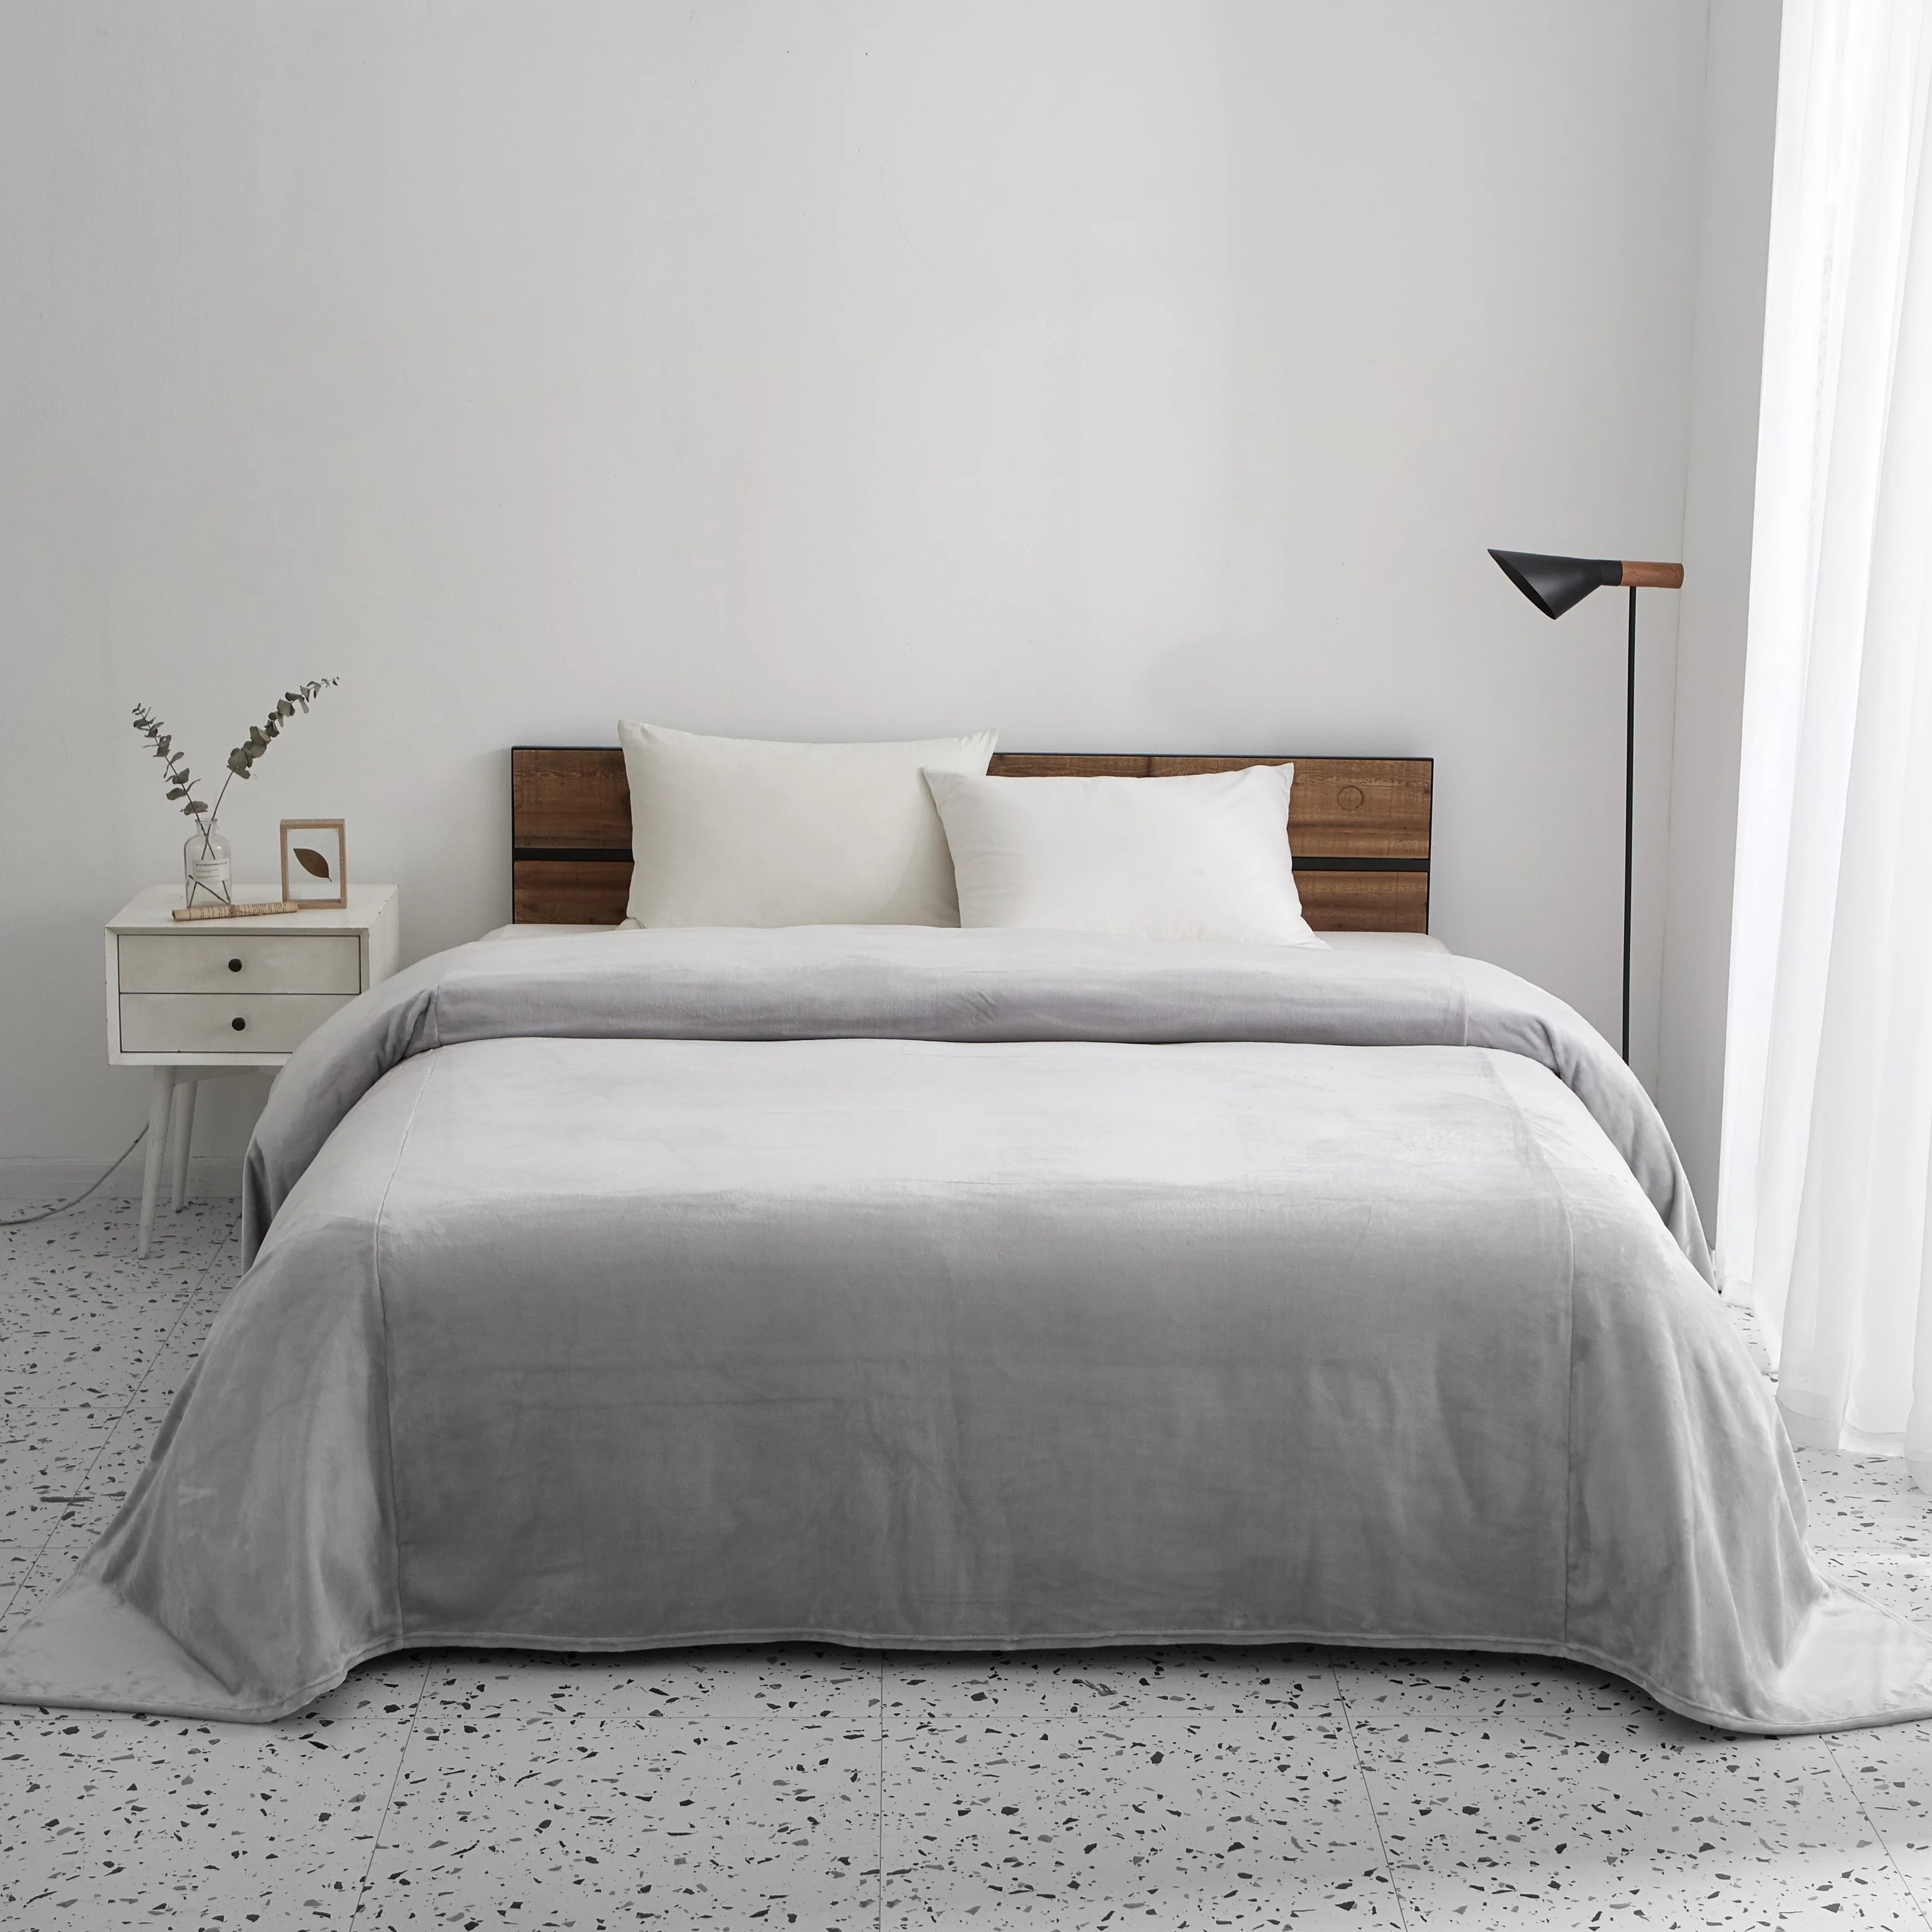 A fleece blanket spread on a bed in a bedroom